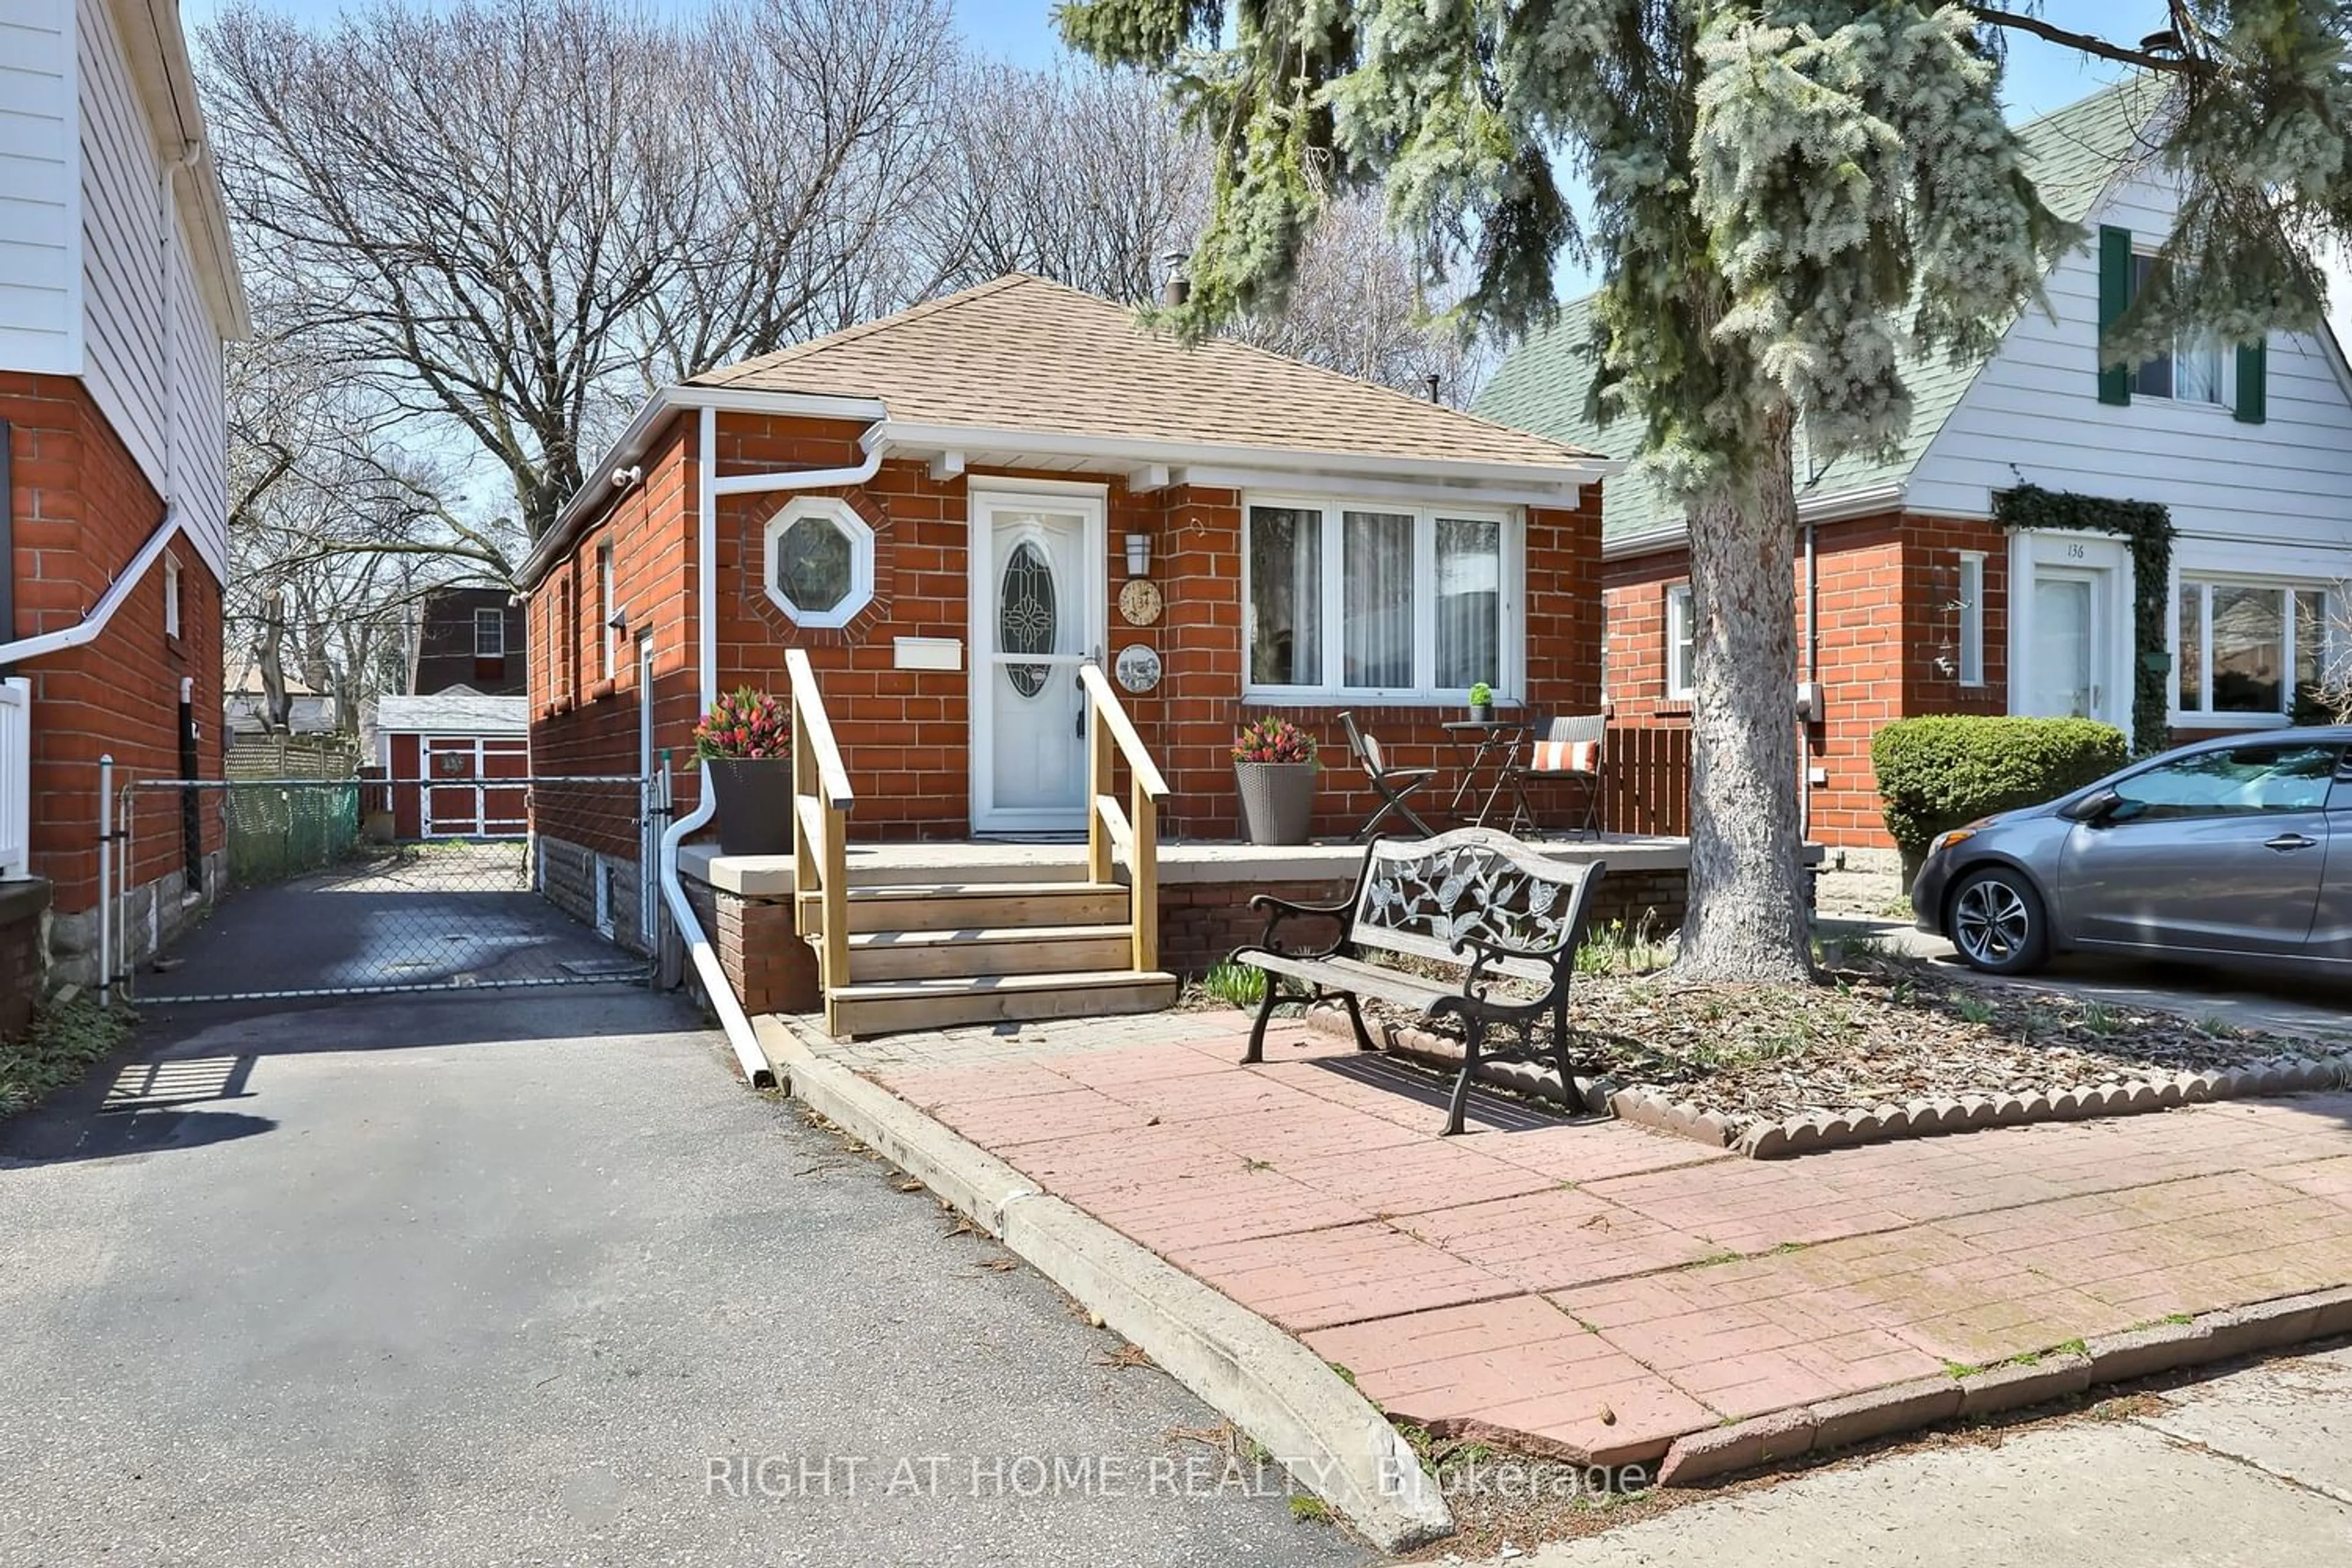 Home with brick exterior material for 134 Dunington Dr, Toronto Ontario M1N 3E6